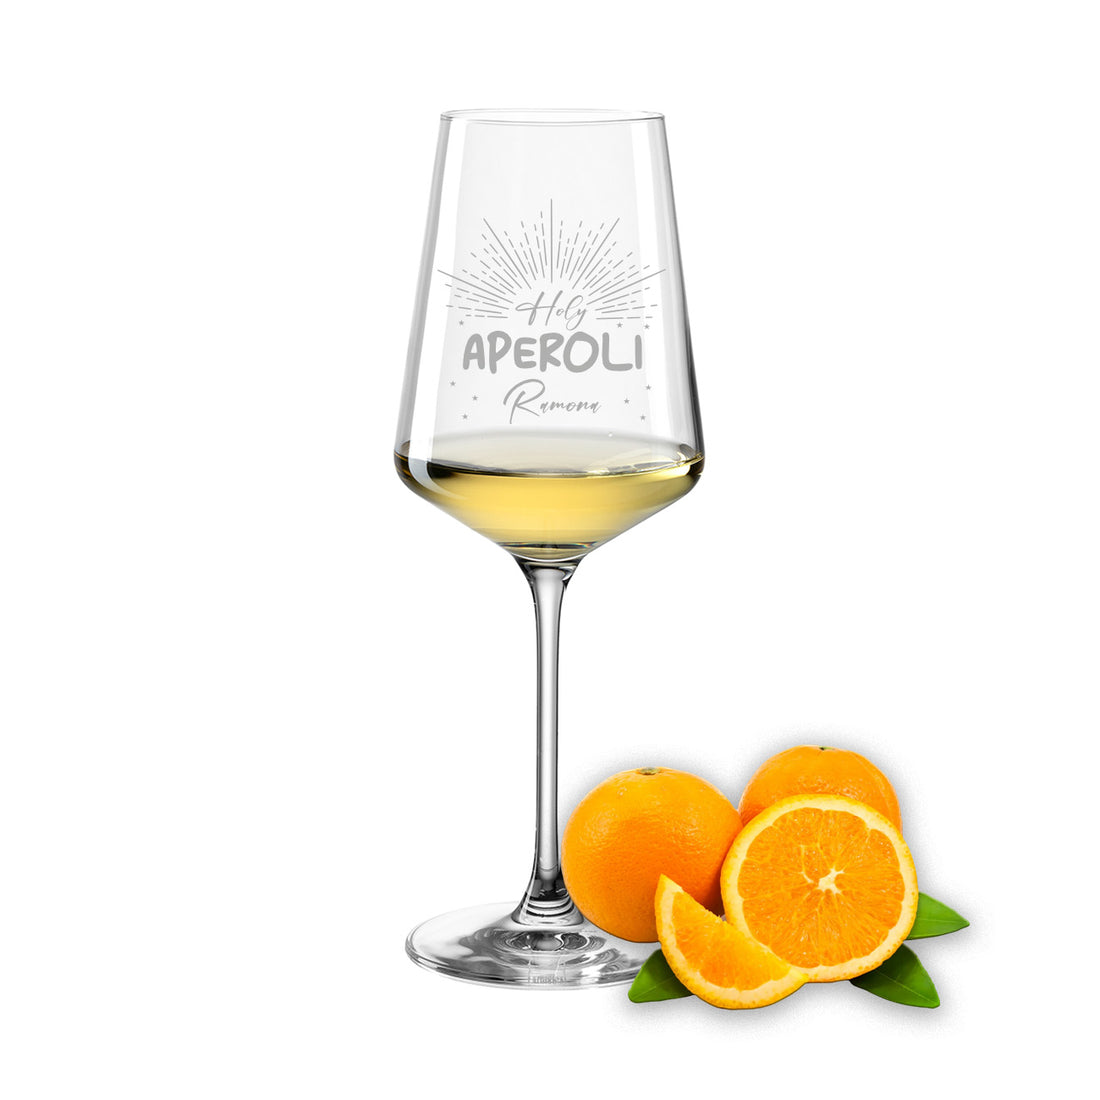 Weinglas mit Gravur Leonardo Puccini "HOLY APEROLI" mit Wunschname